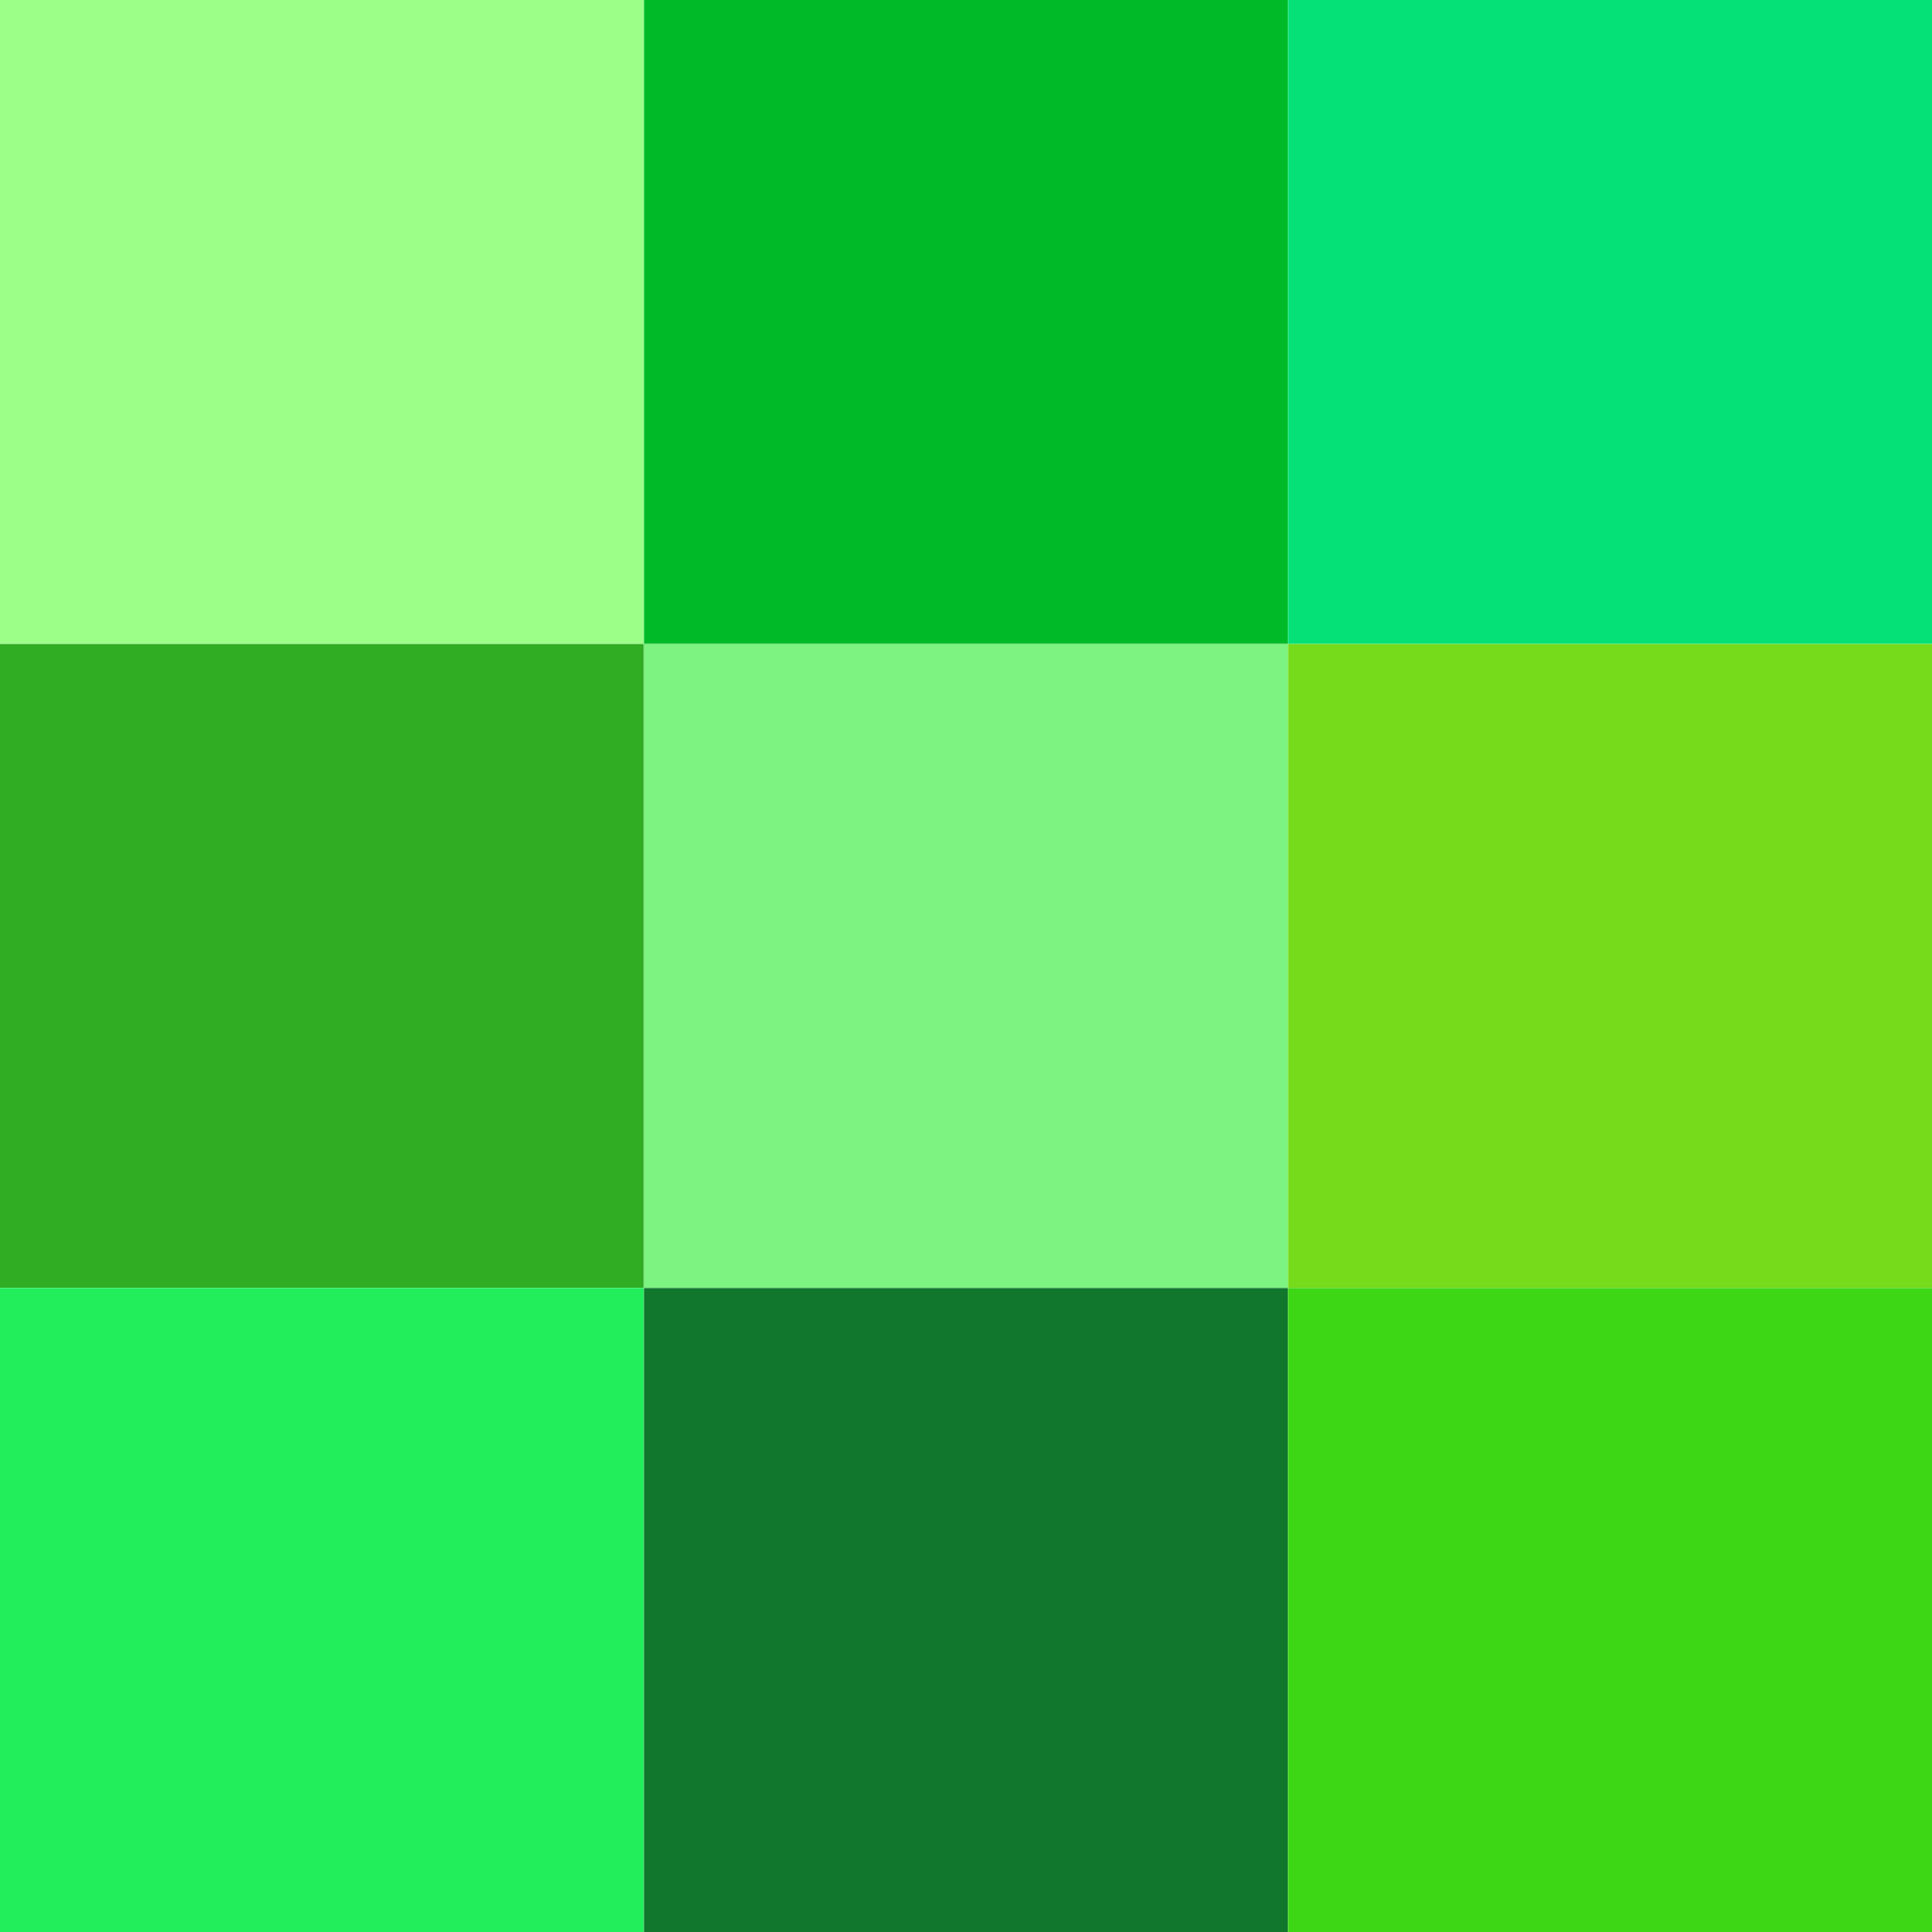    Favorite color? Green.   